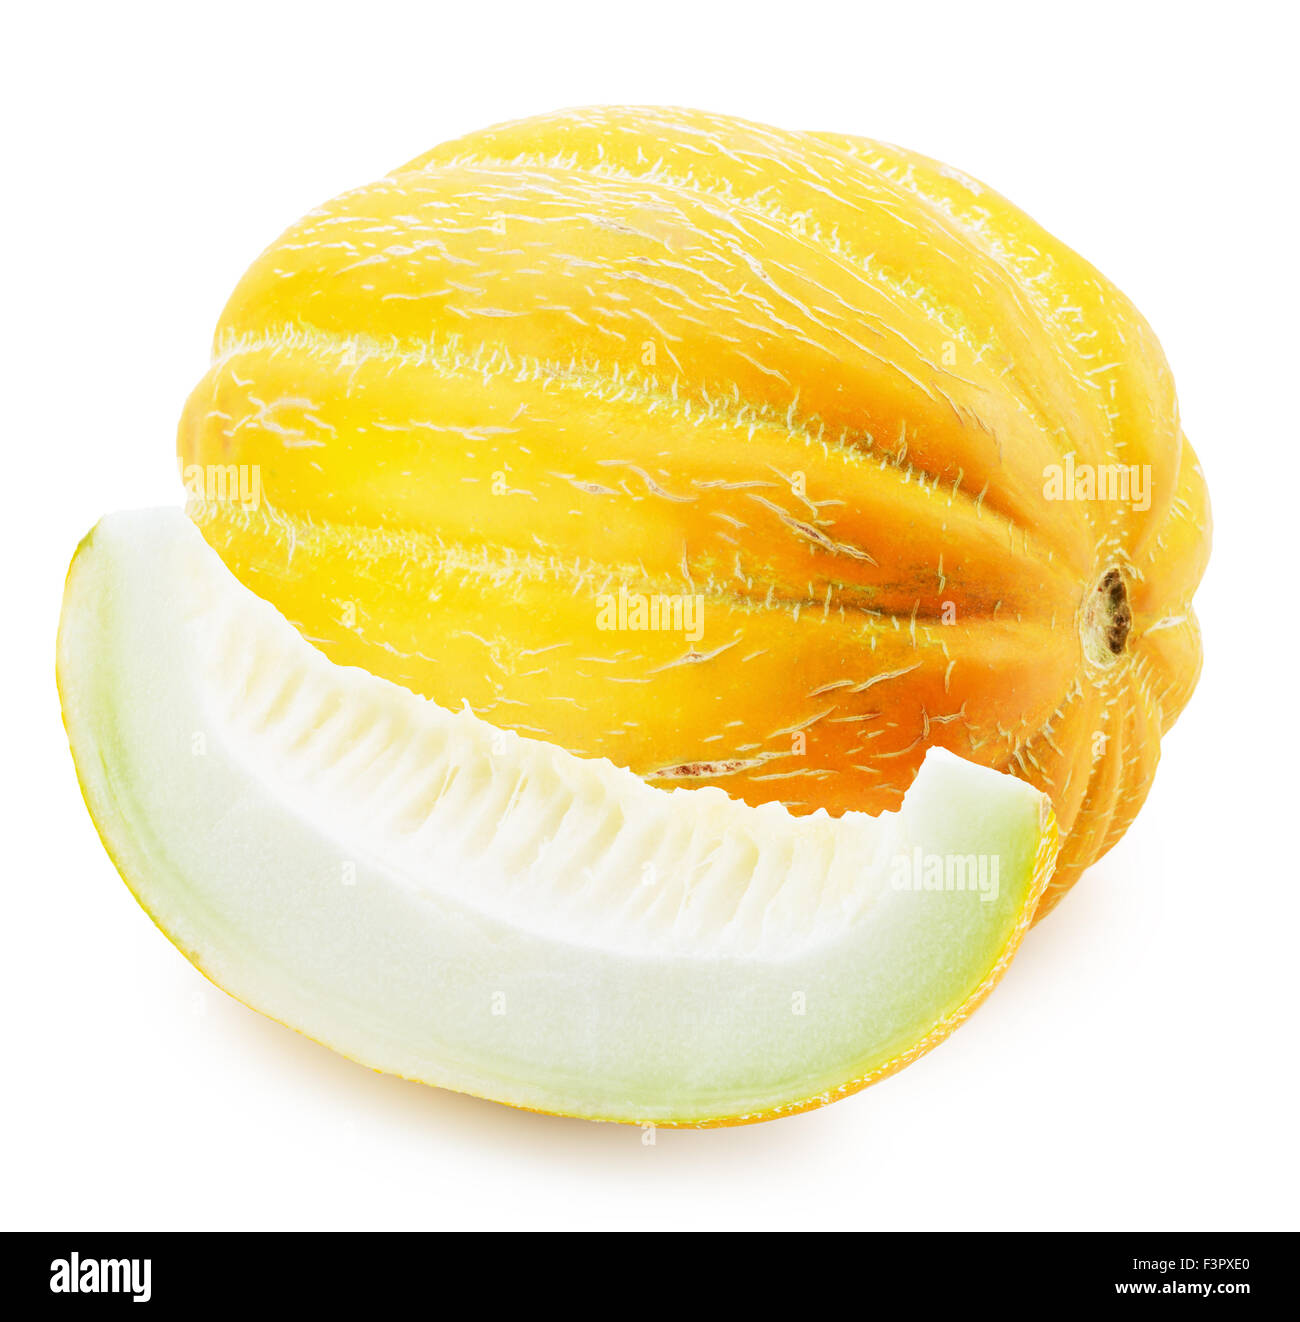 ripe melon on the white background. Stock Photo